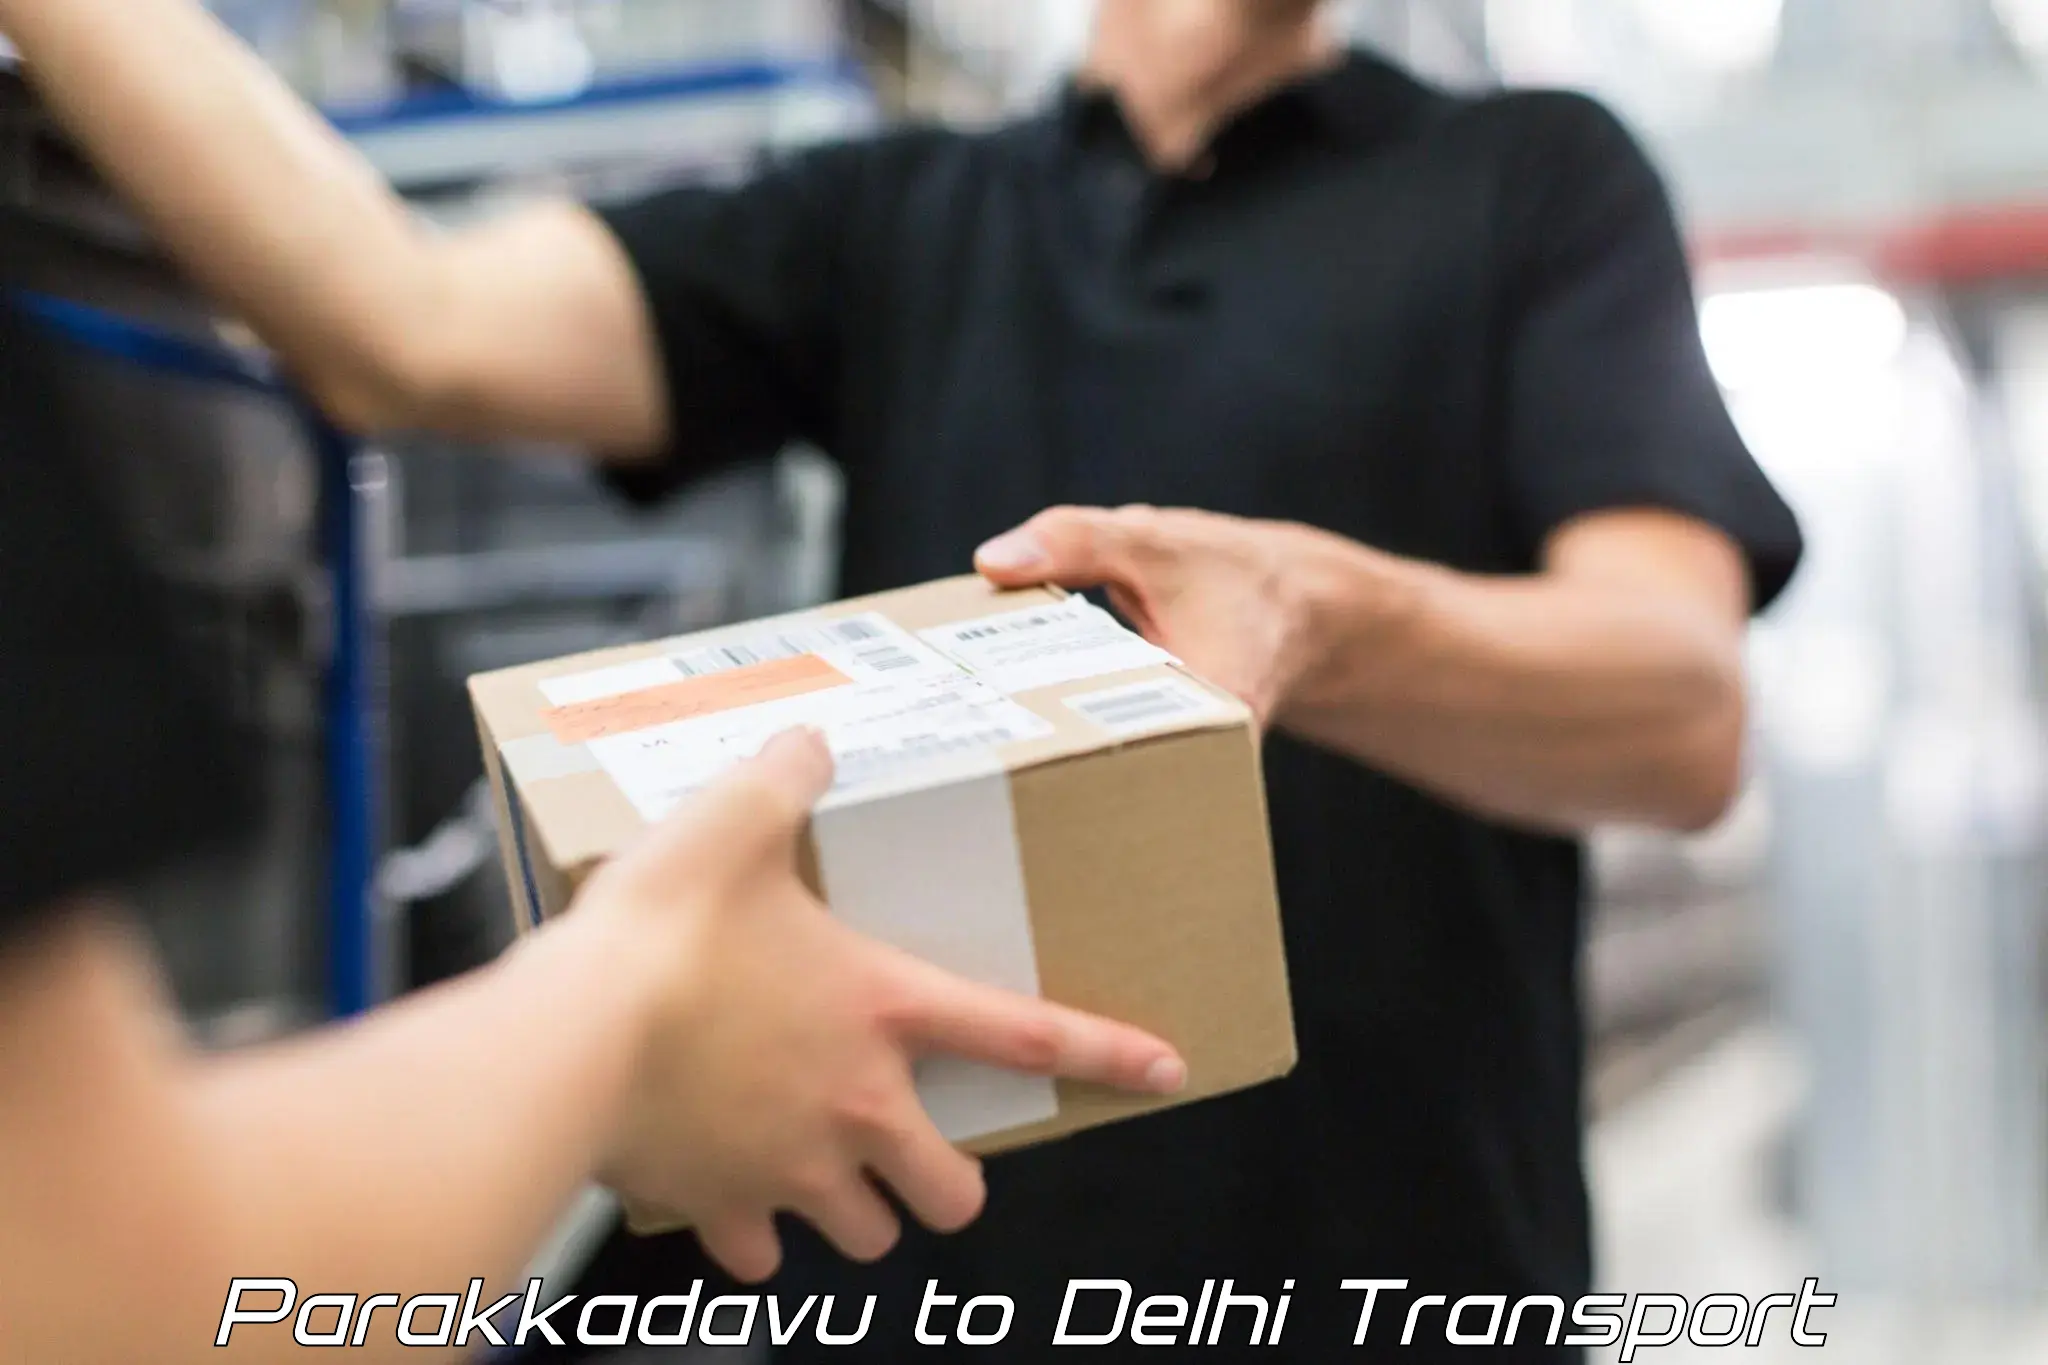 Truck transport companies in India Parakkadavu to Delhi